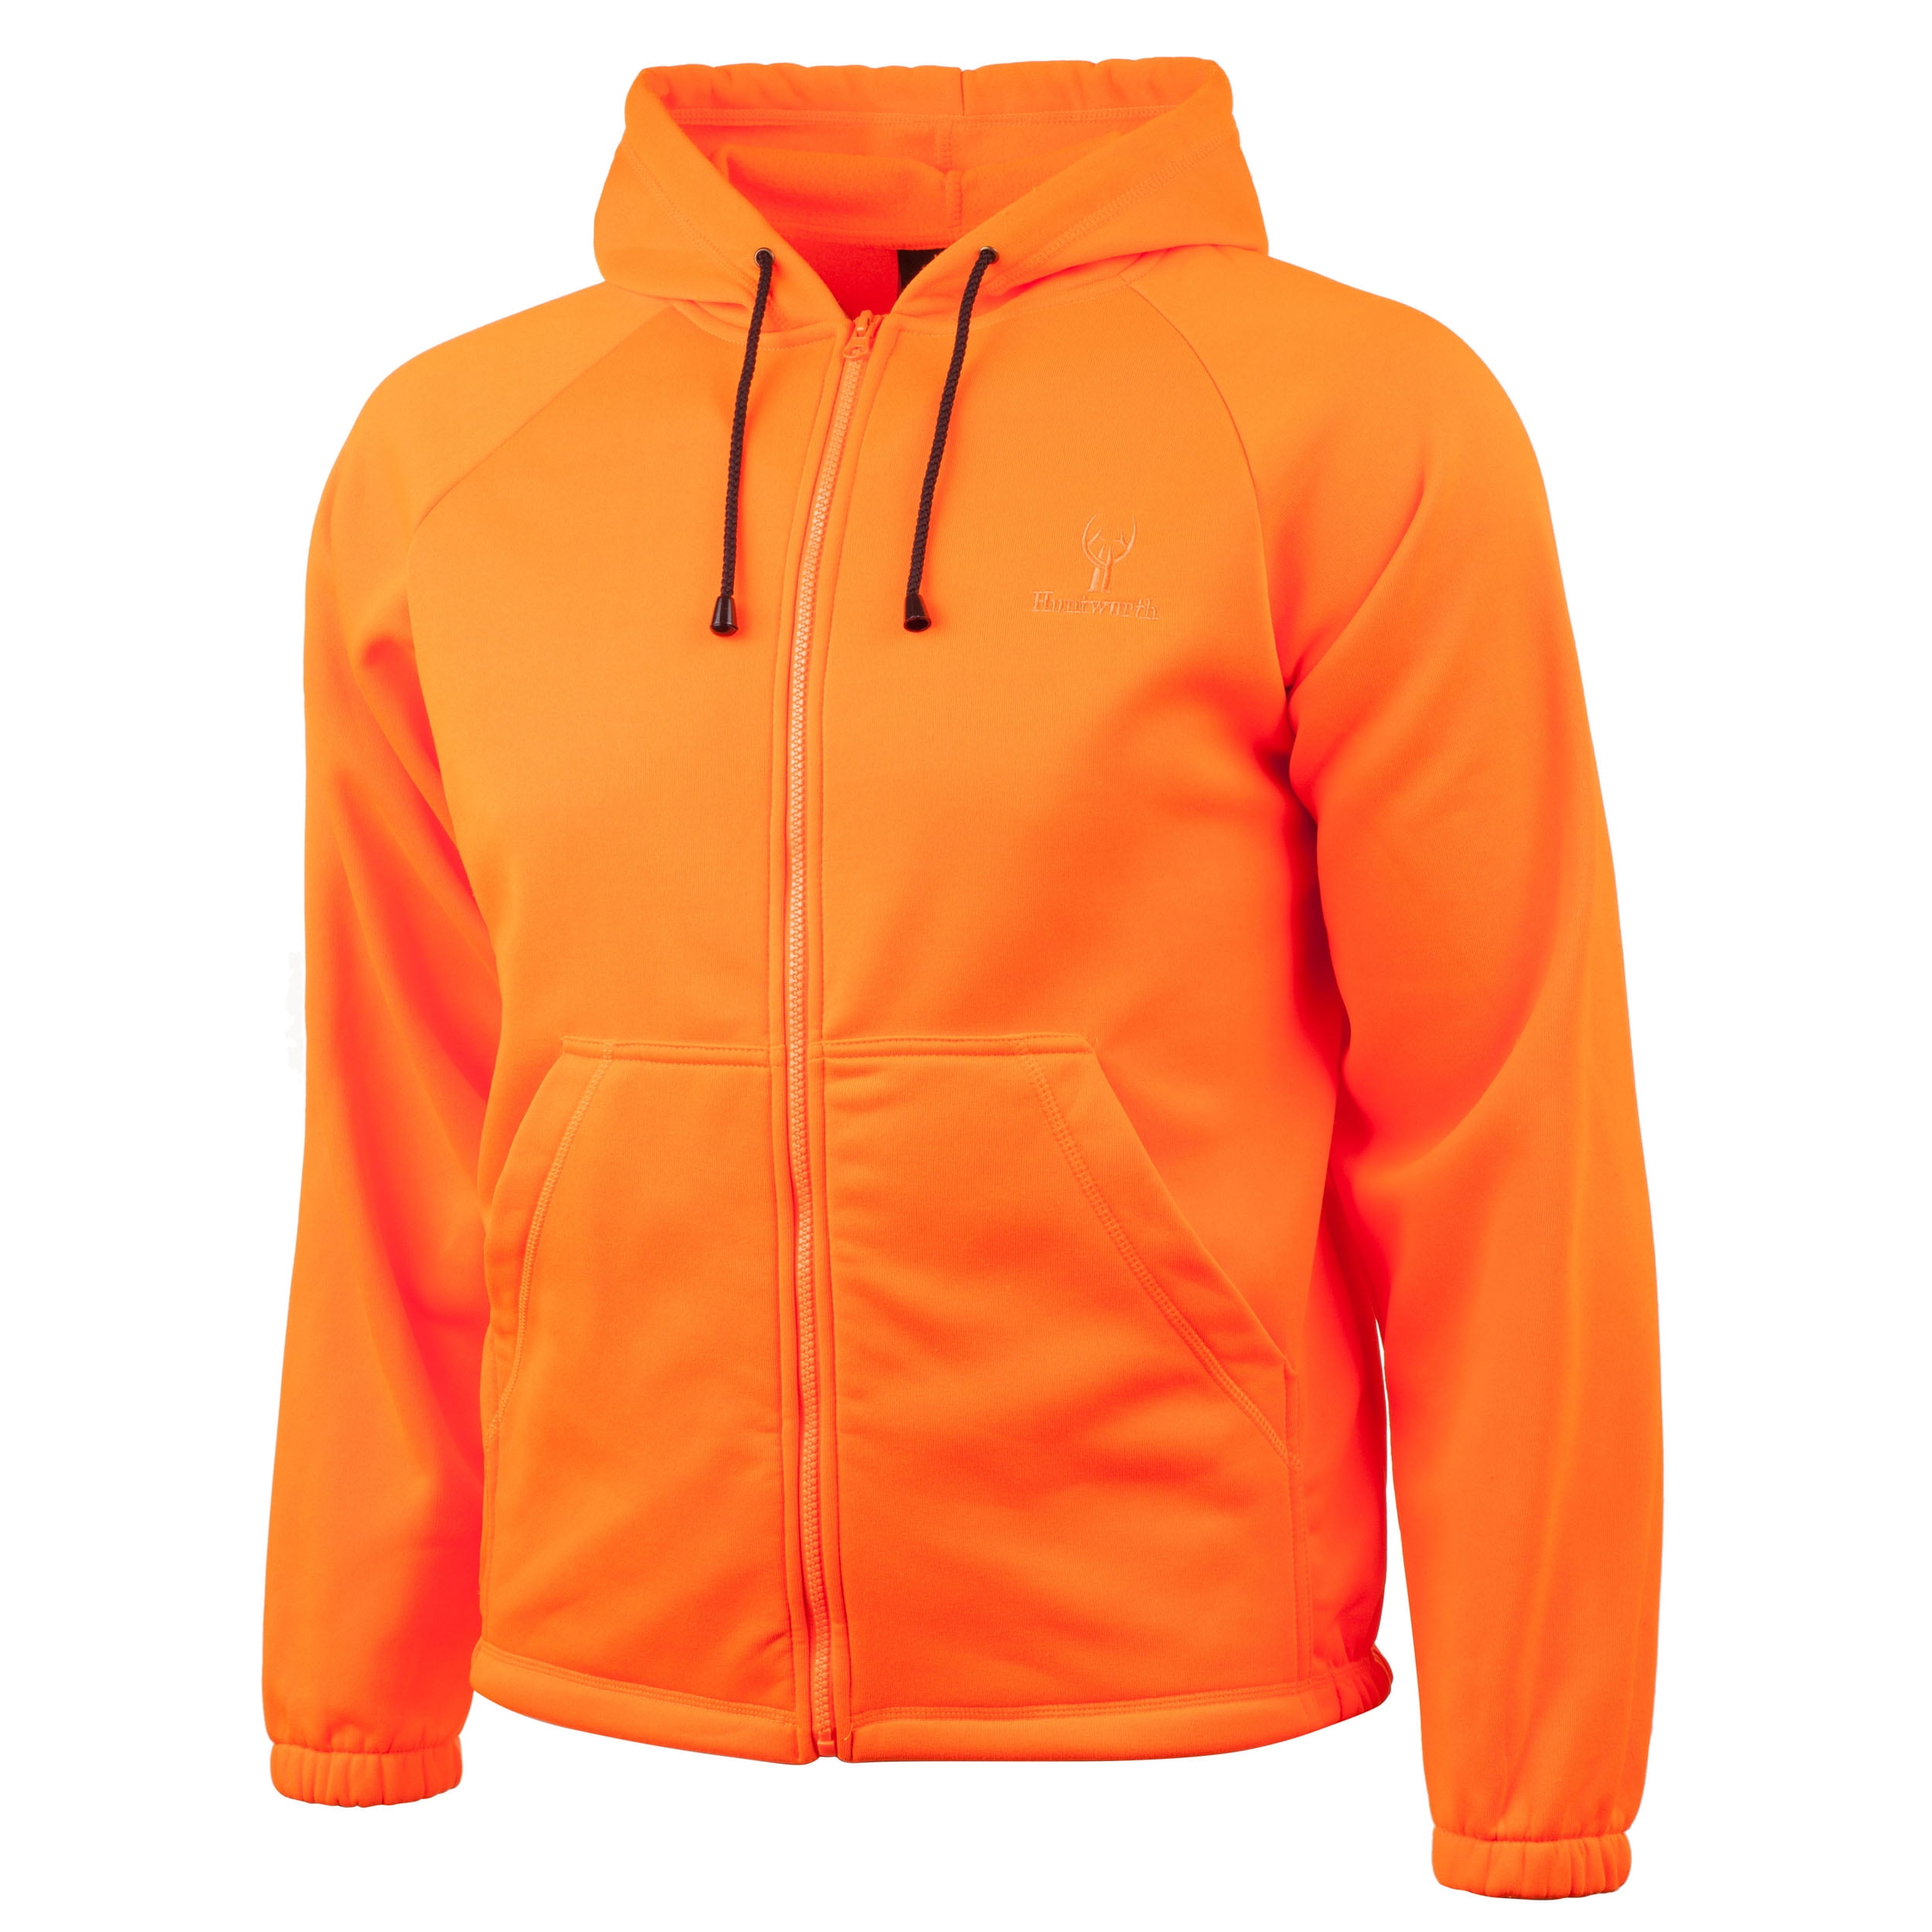 Huntworth - Men's Blaze Orange Jersey Knit Hoodie Medium - Walmart.com ...